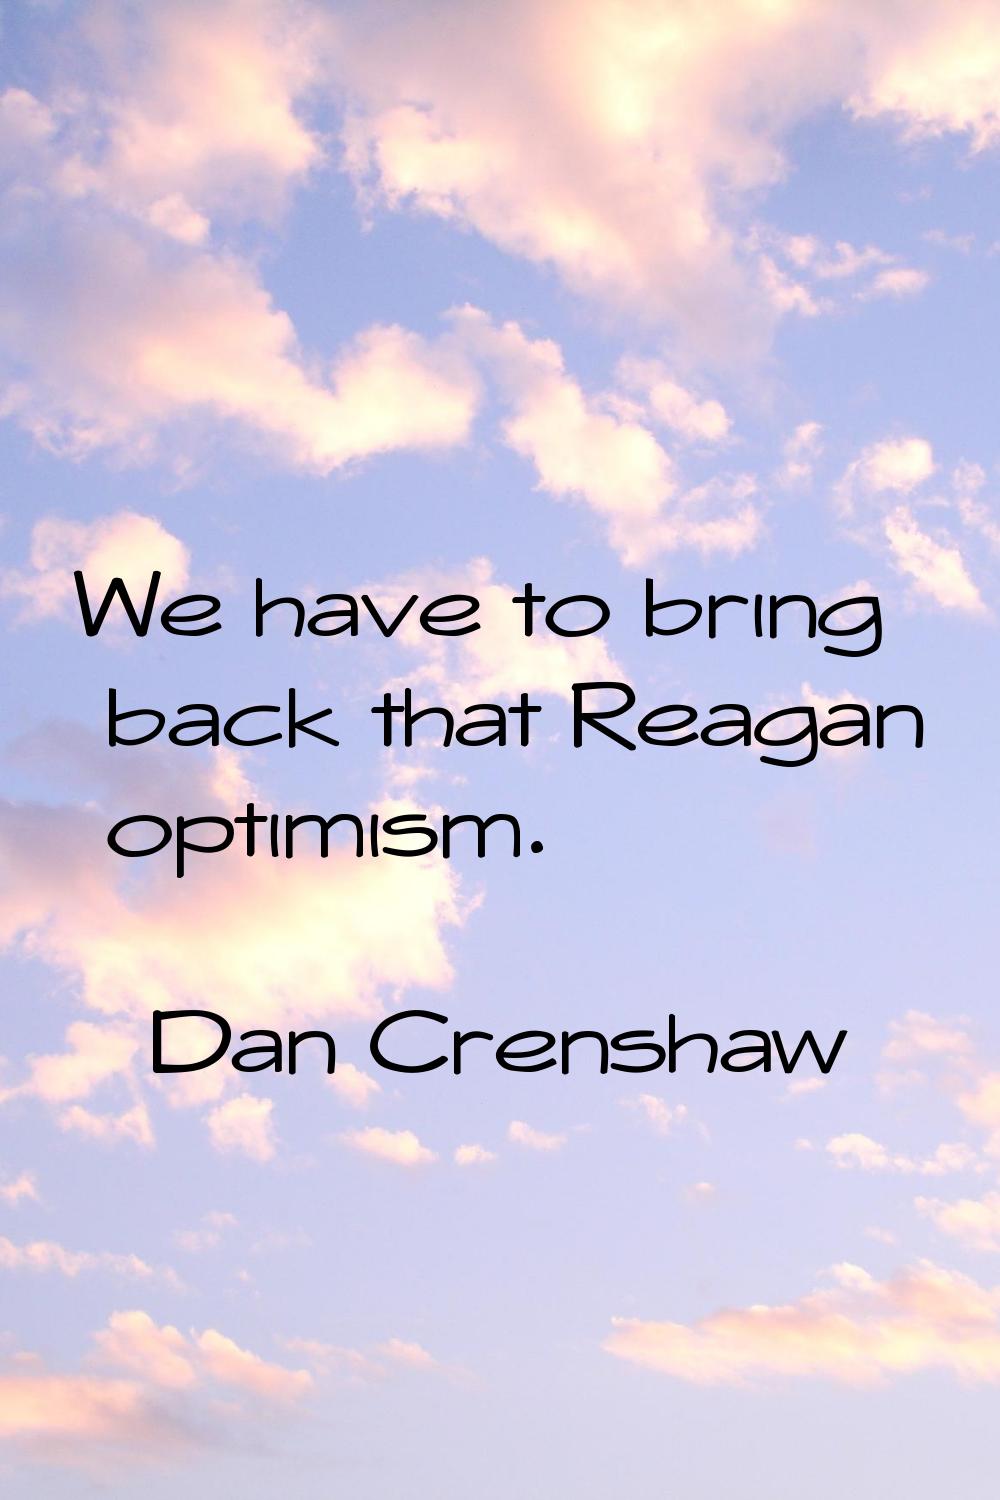 We have to bring back that Reagan optimism.